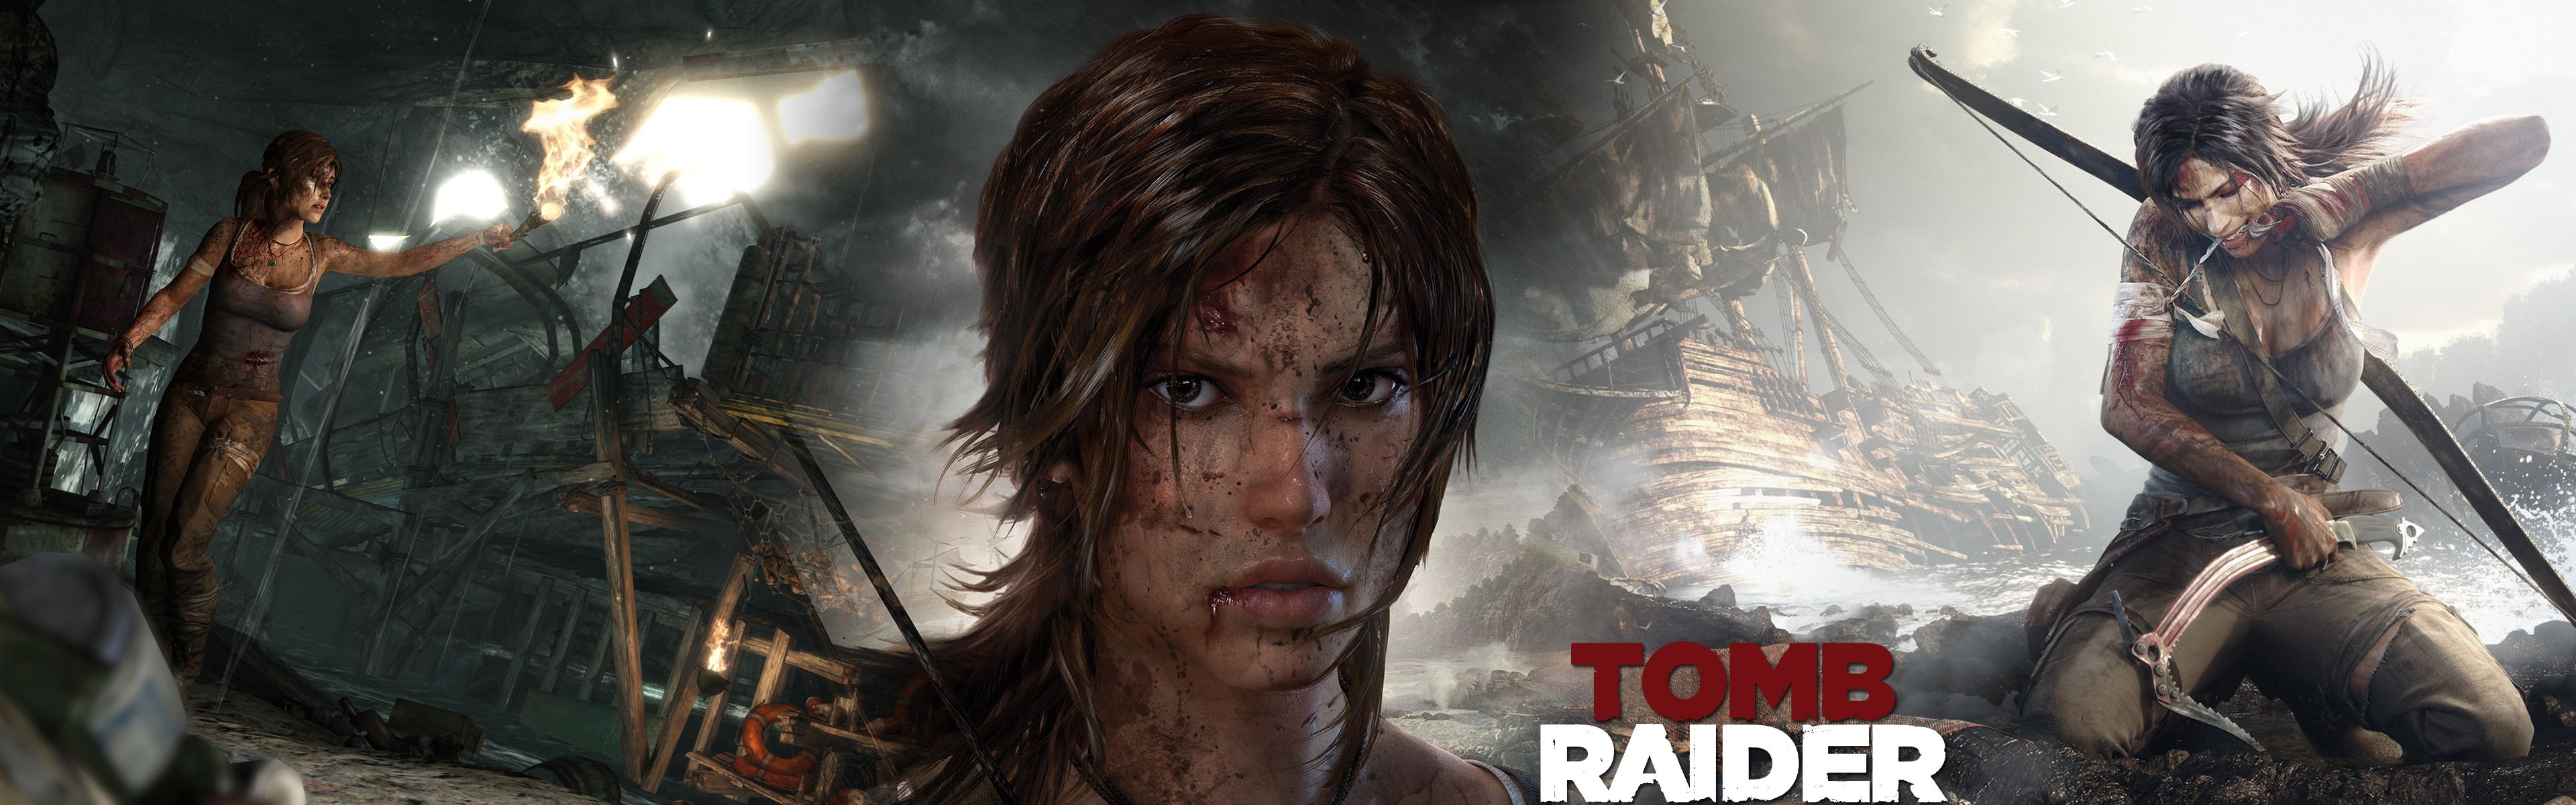 Tomb Raider wallpapers, 4K HD, Backgrounds, 3840x1200 Dual Screen Desktop